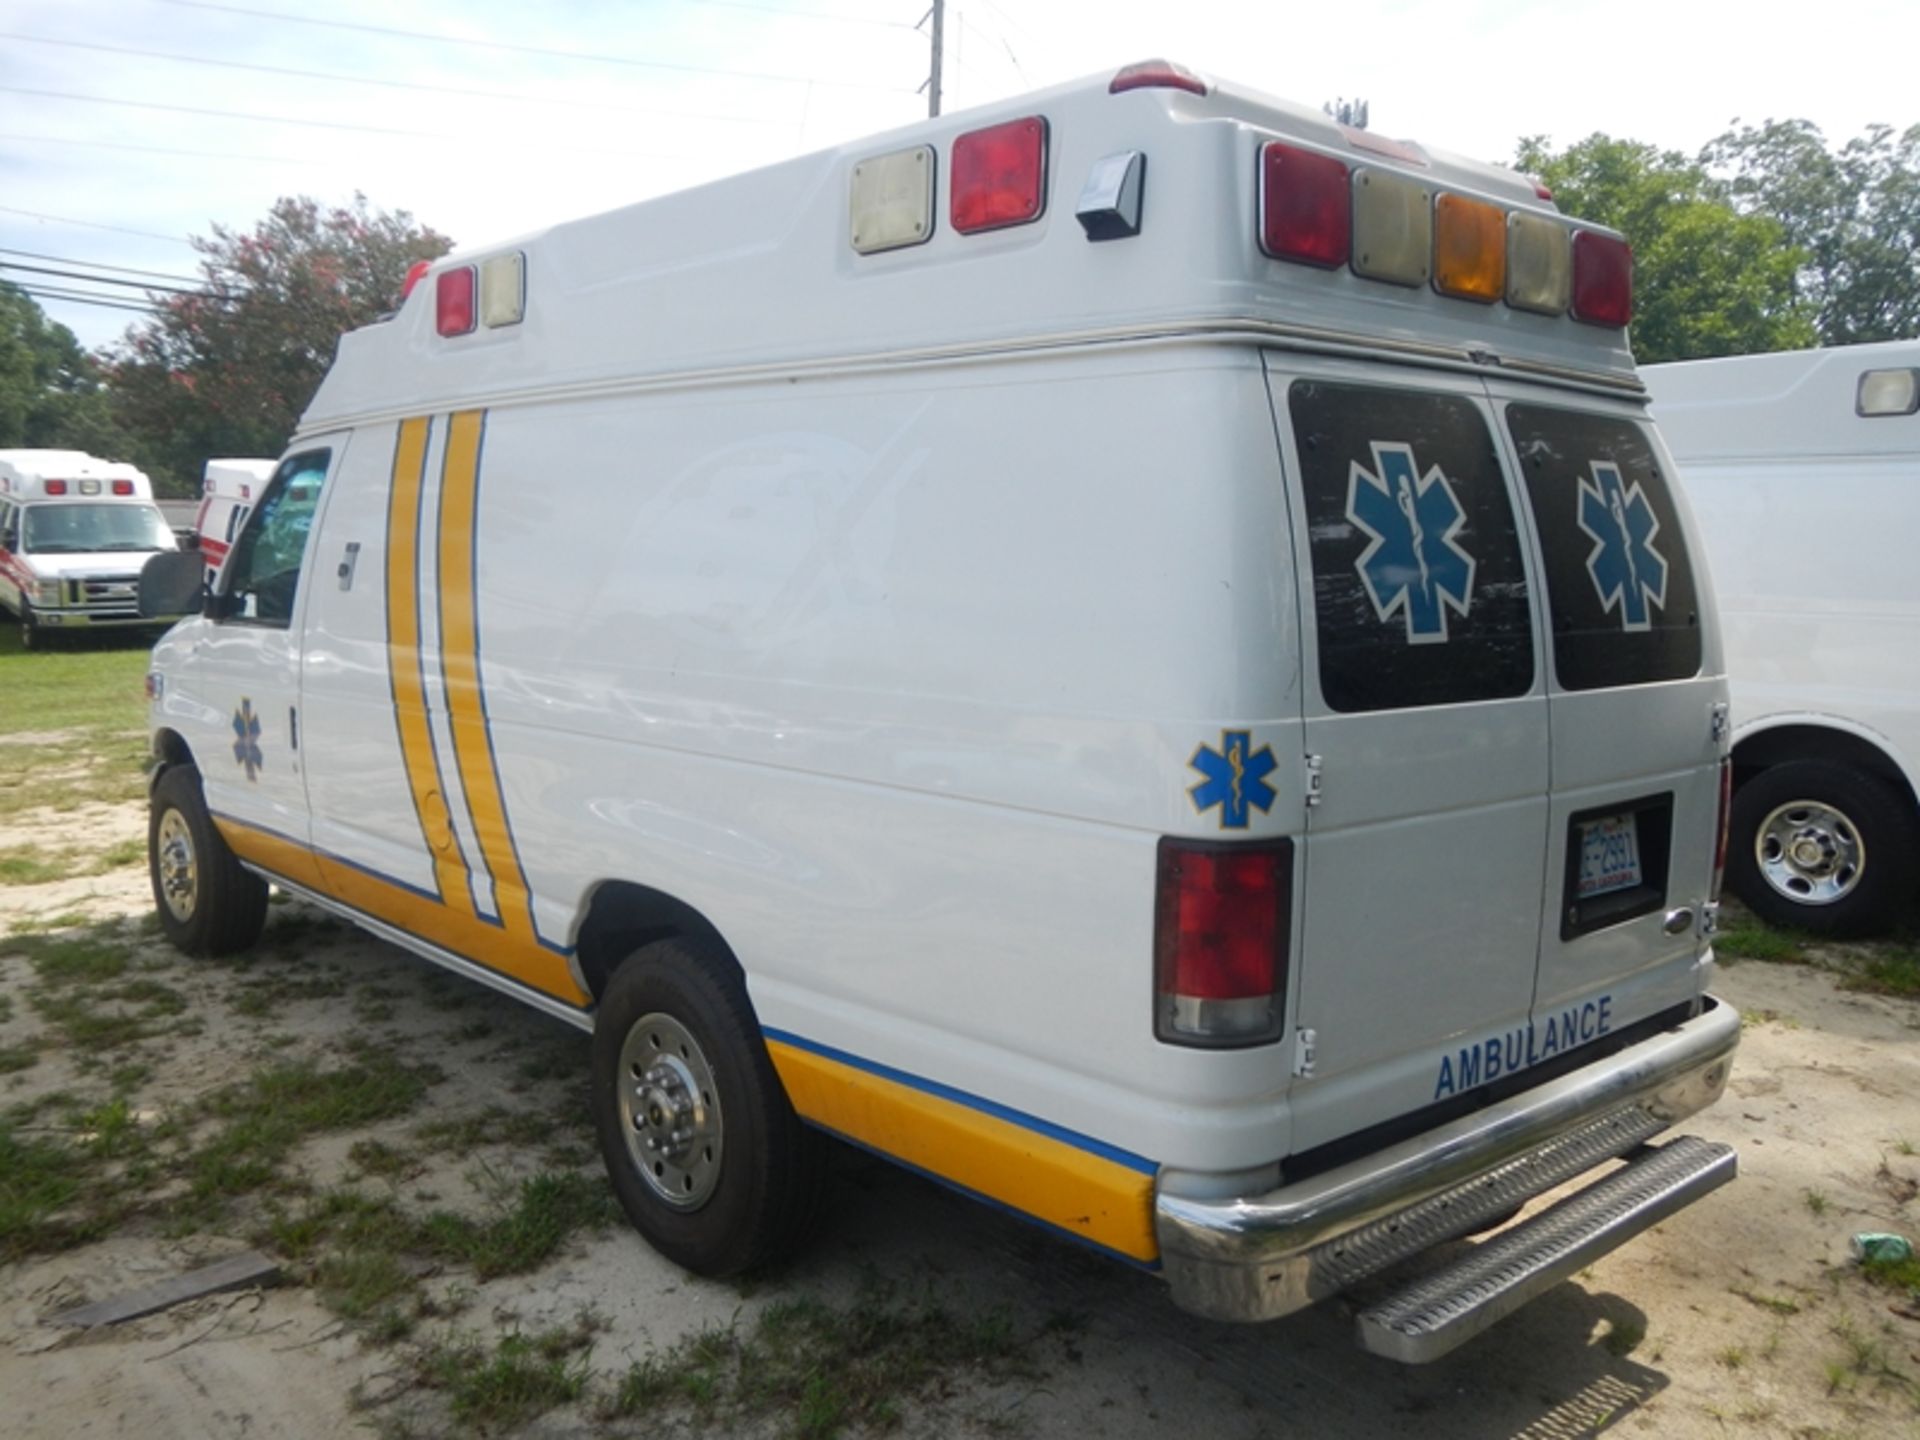 2001 FORD E-350 Super Duty Type II Ambulance, 7.3 diesel - 248,021 miles - 1FDSS34F51HA84186 - Image 5 of 6